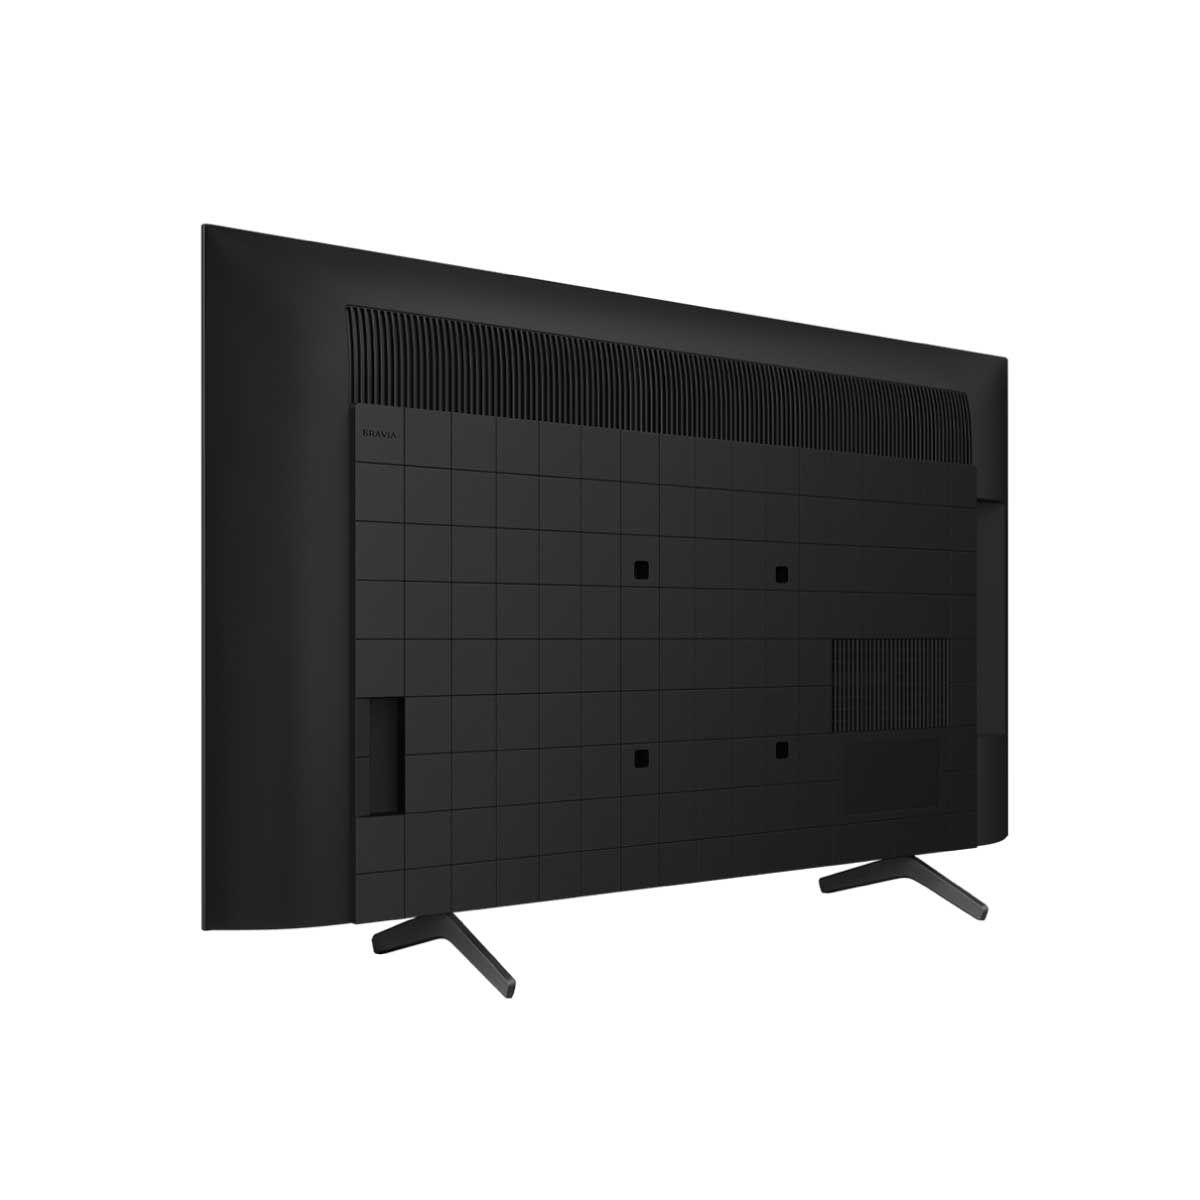 SONY BRAVIA LED Google TV 4K รุ่น KD-43X80K สมาร์ททีวี Google TV 2022